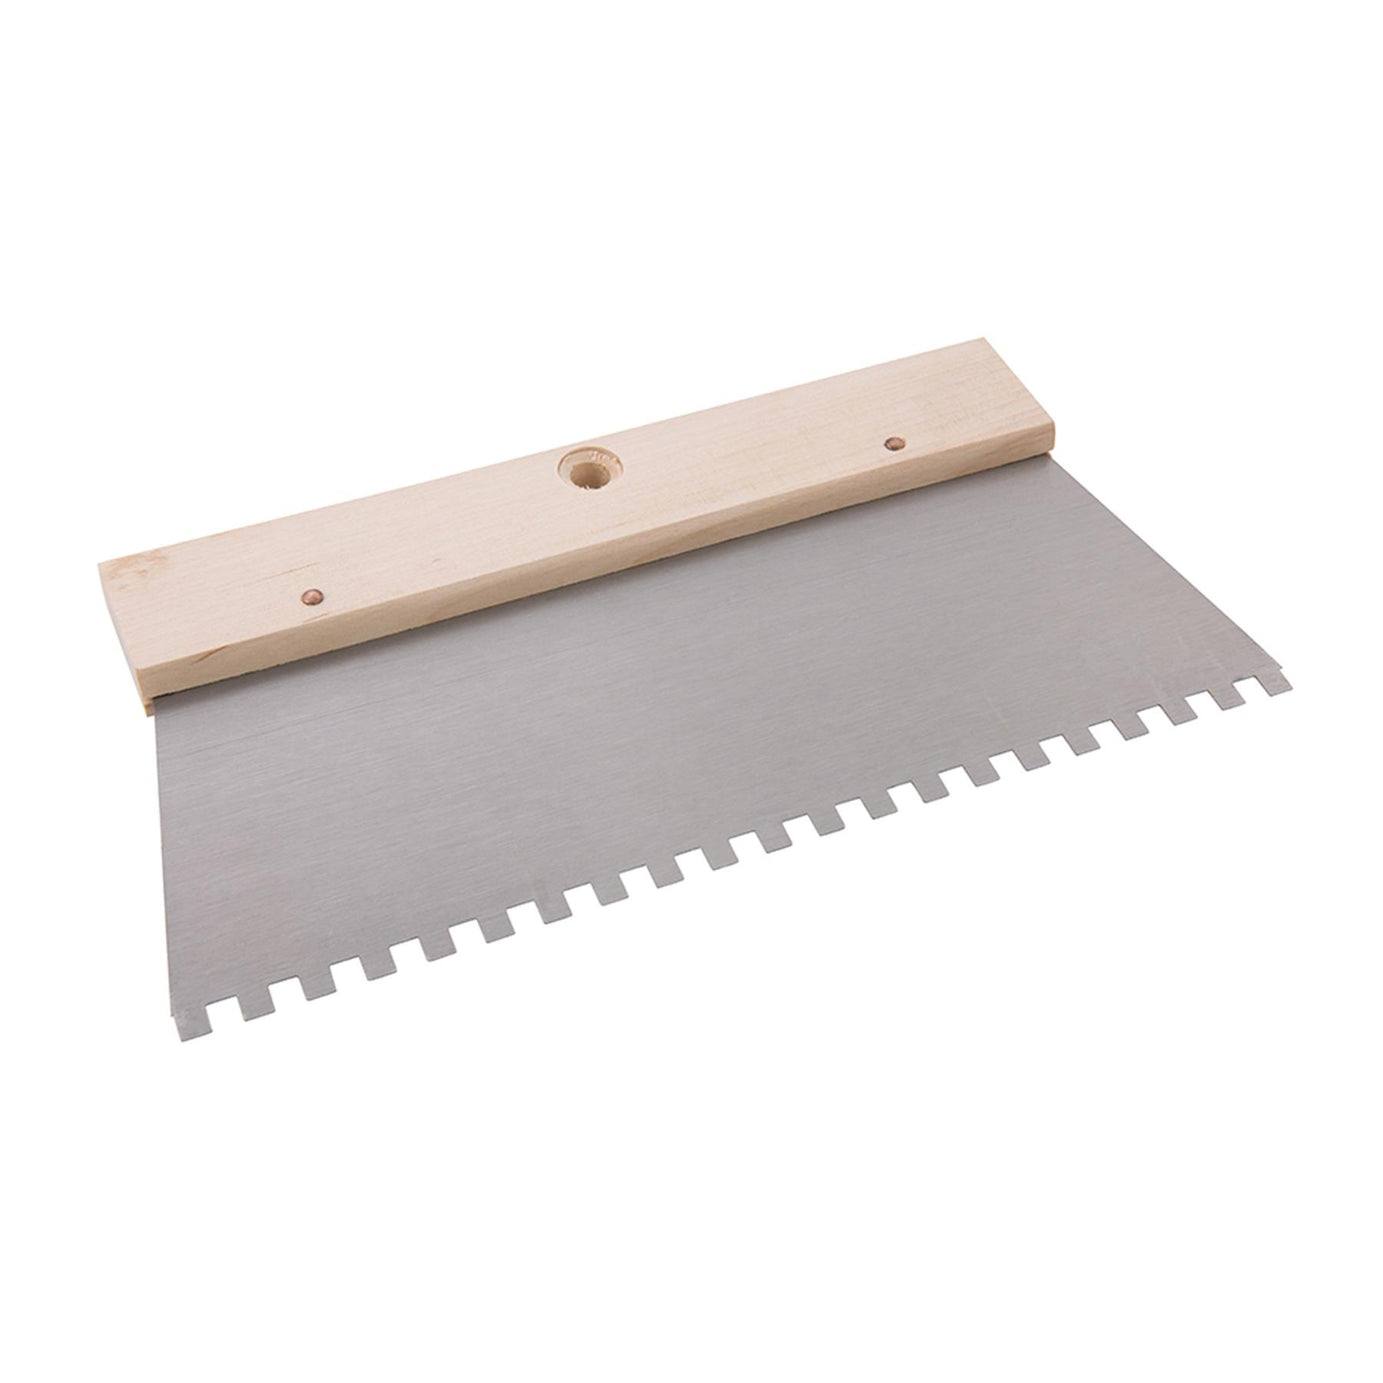 Adhesive Comb 6mm Teeth Floor Wall Tile Grout Plaster Spreader DIY 250mm Long